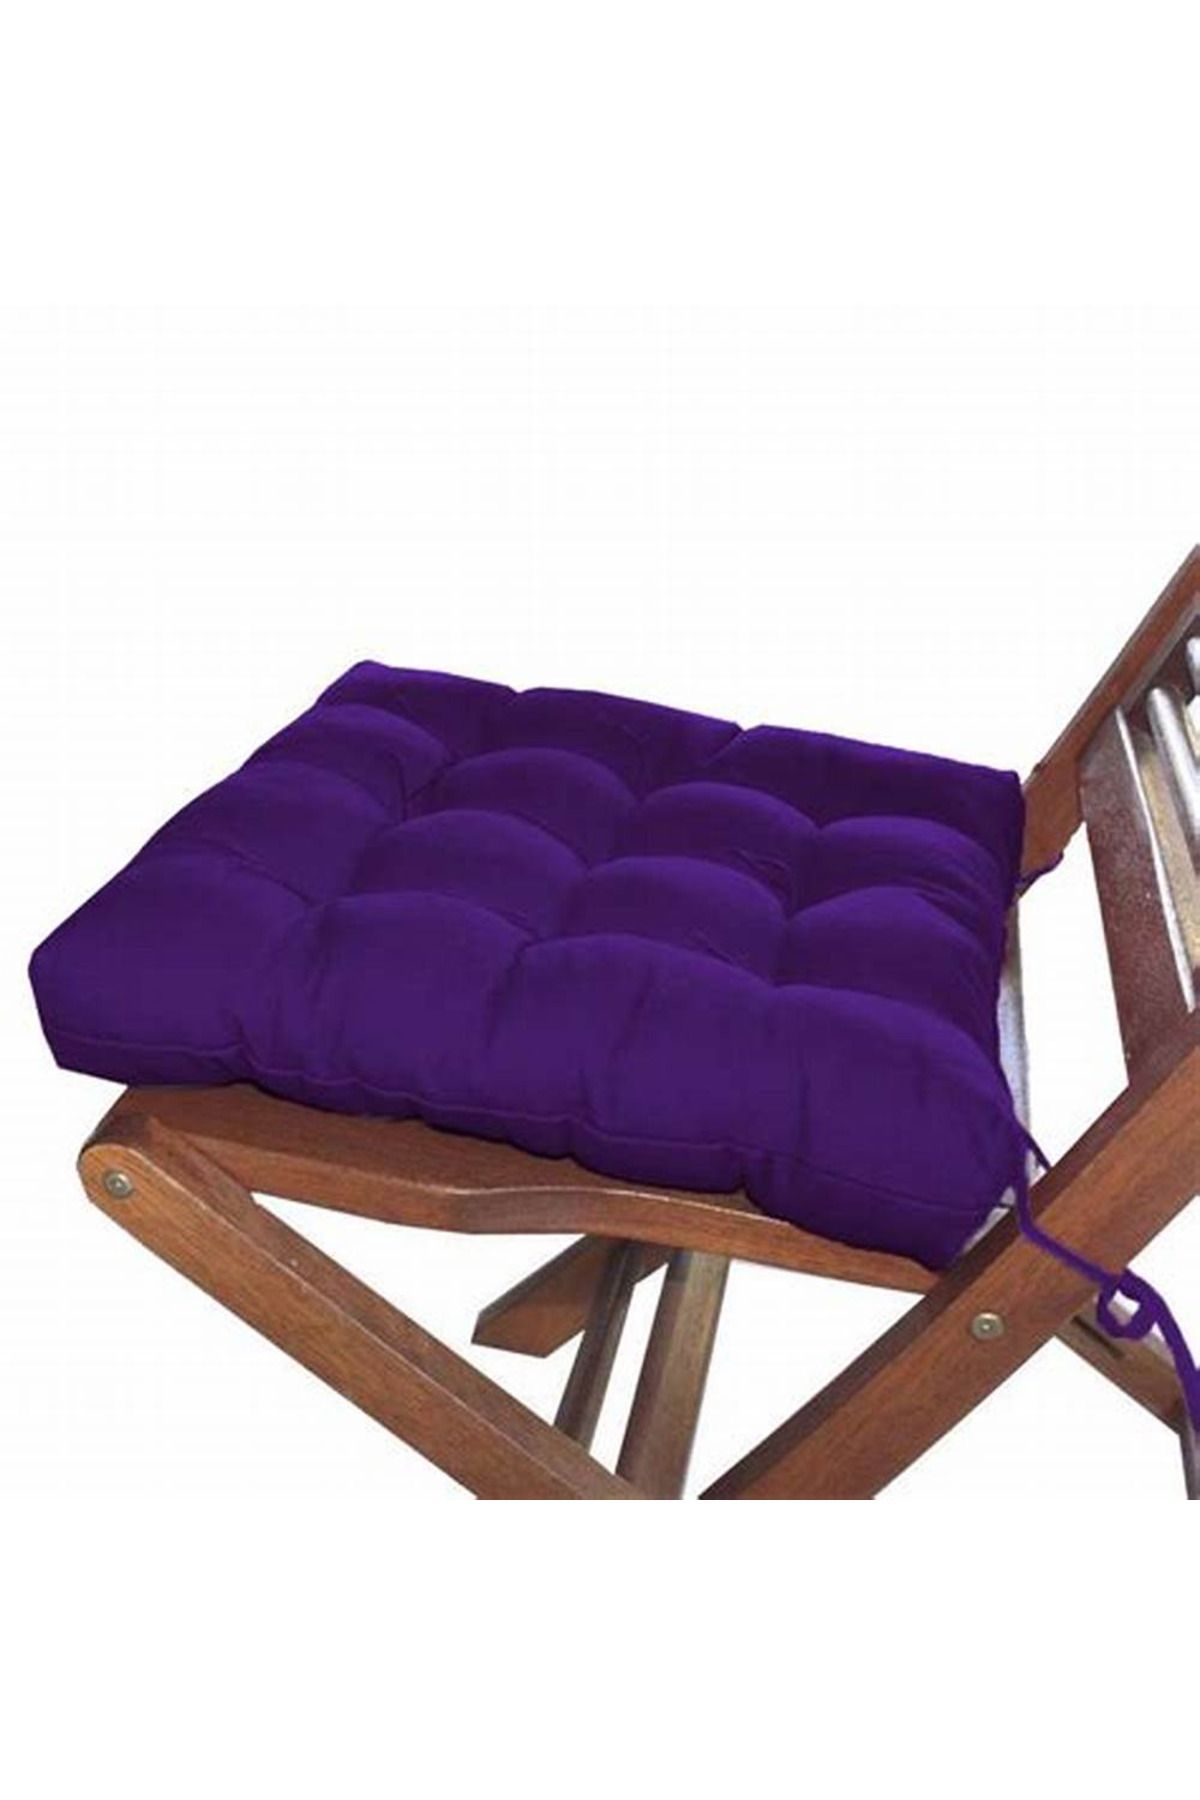 JANGEAR Sandalye Minderi 40×40 özel dikişli ultralüx minder